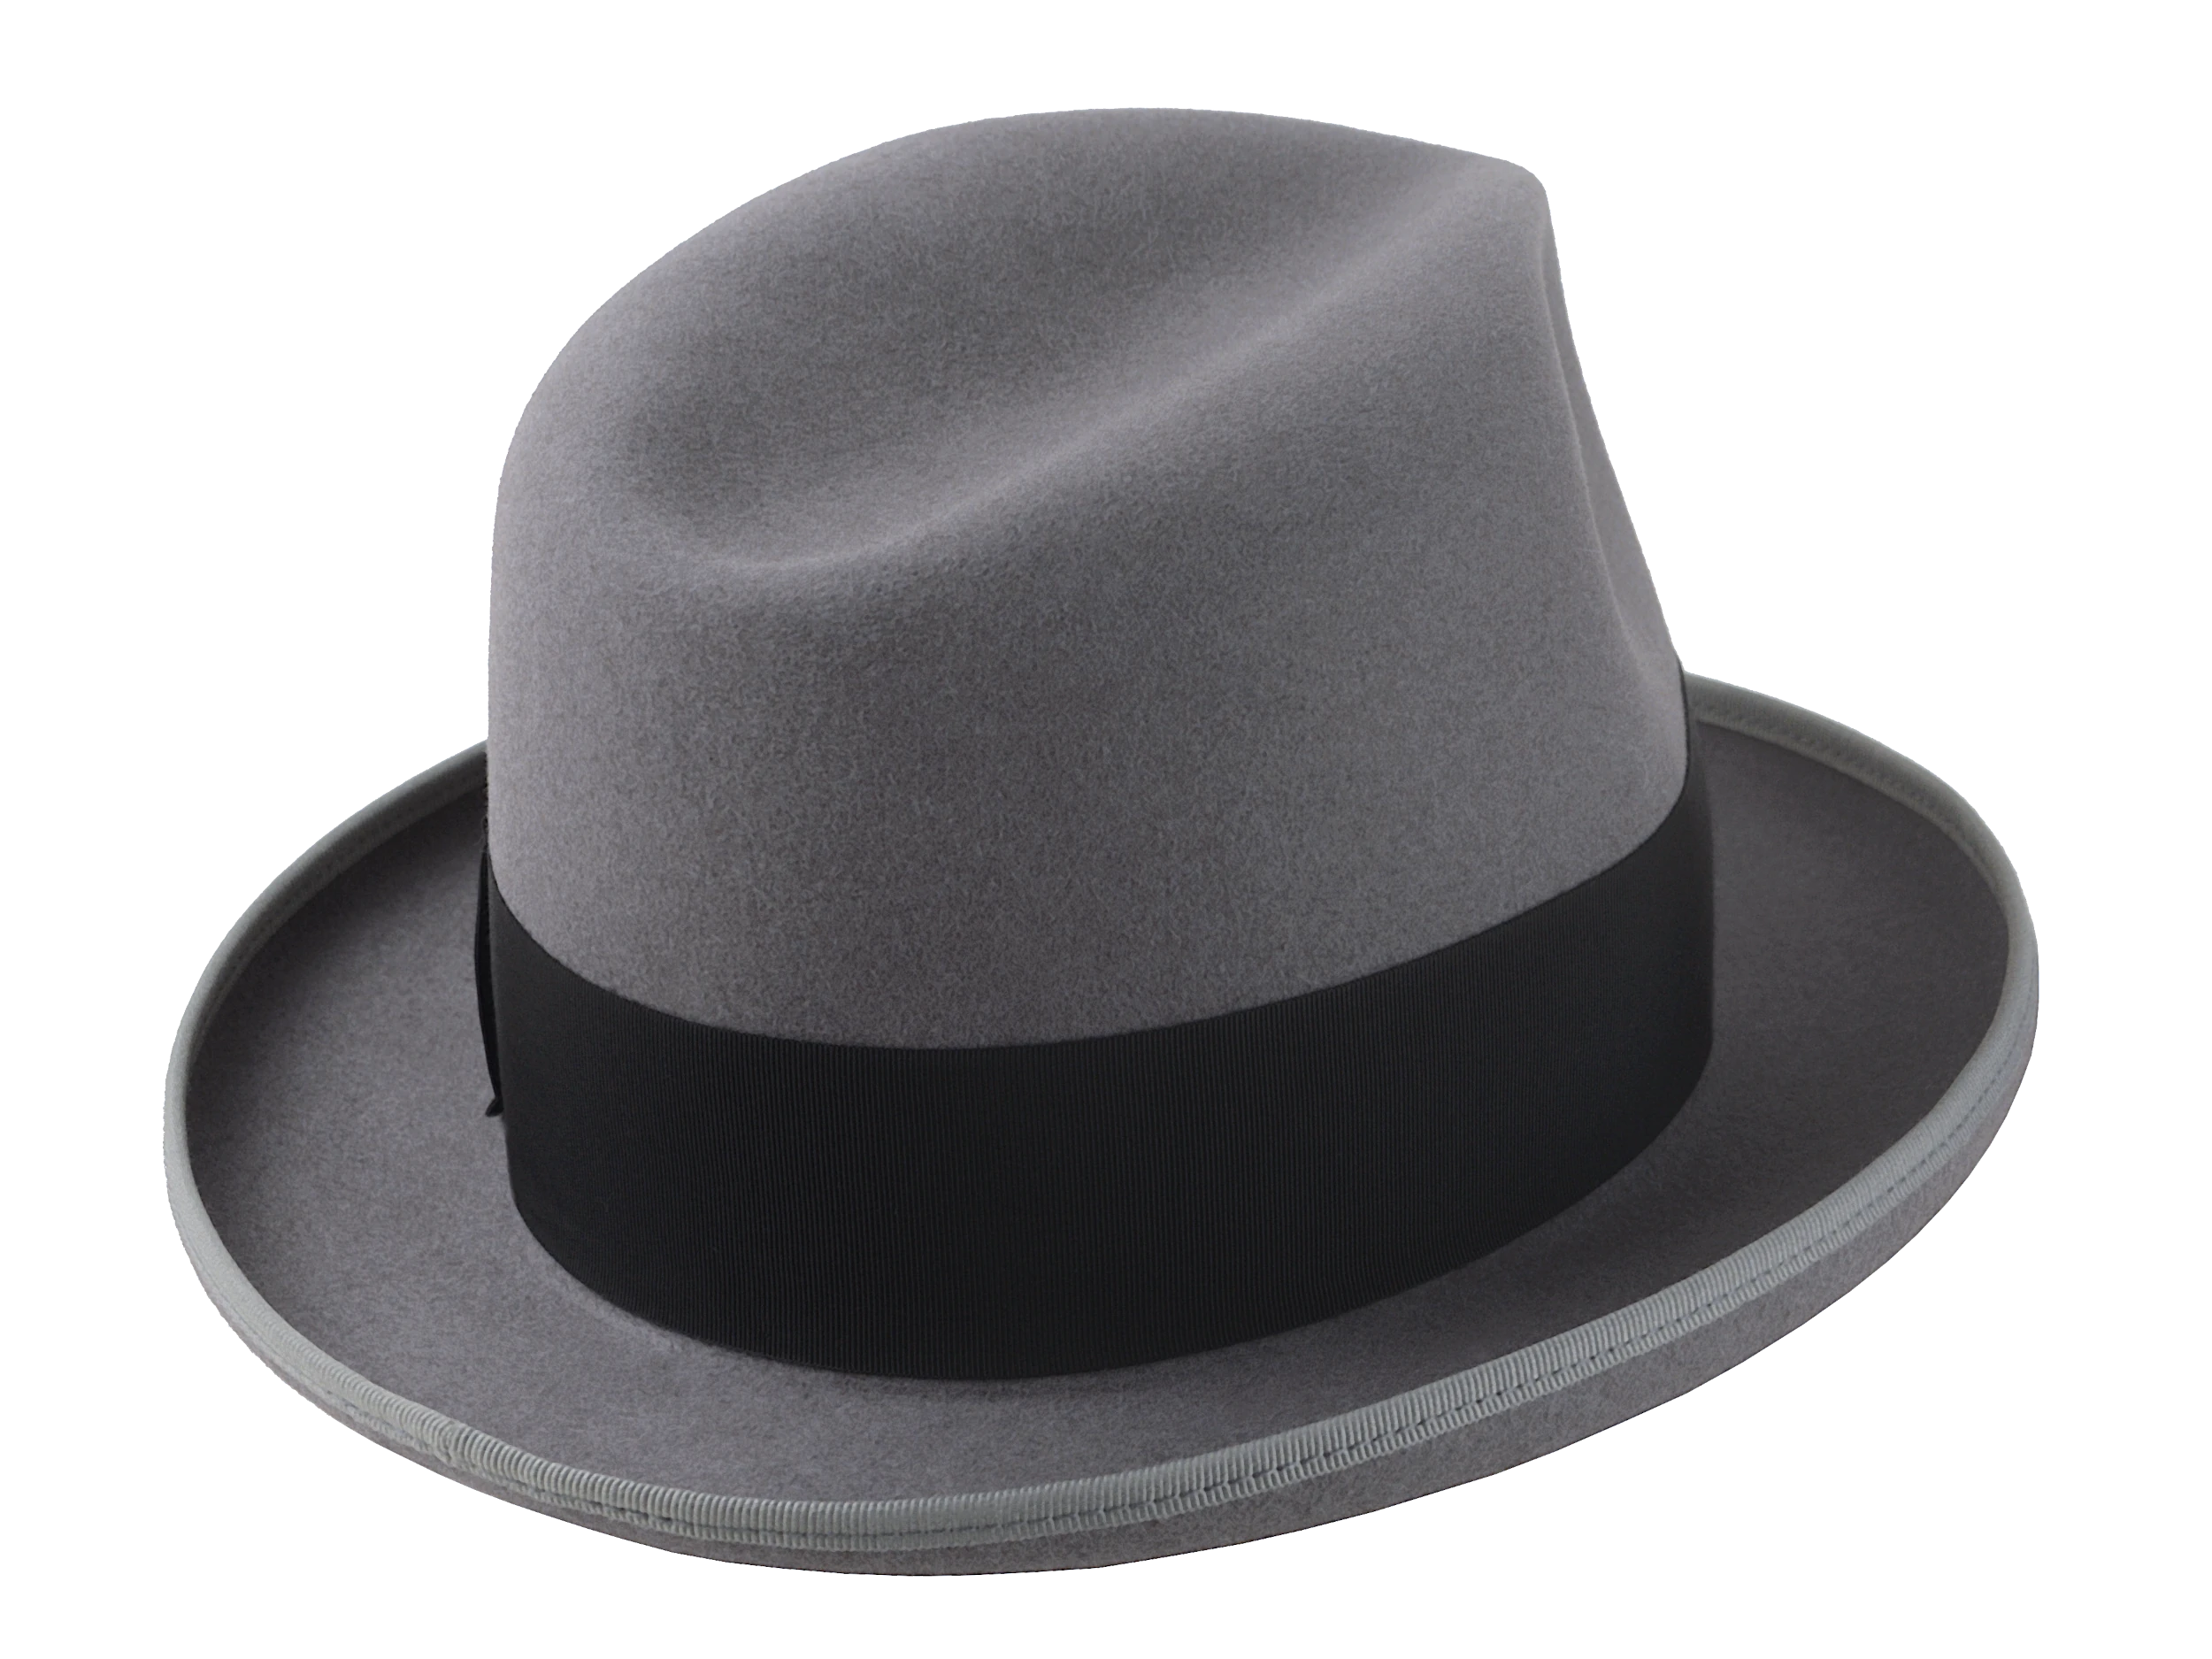 The Grandmaster: Capturing the hat's distinctive style and artisanal craftsmanship | Agnoulita Hats